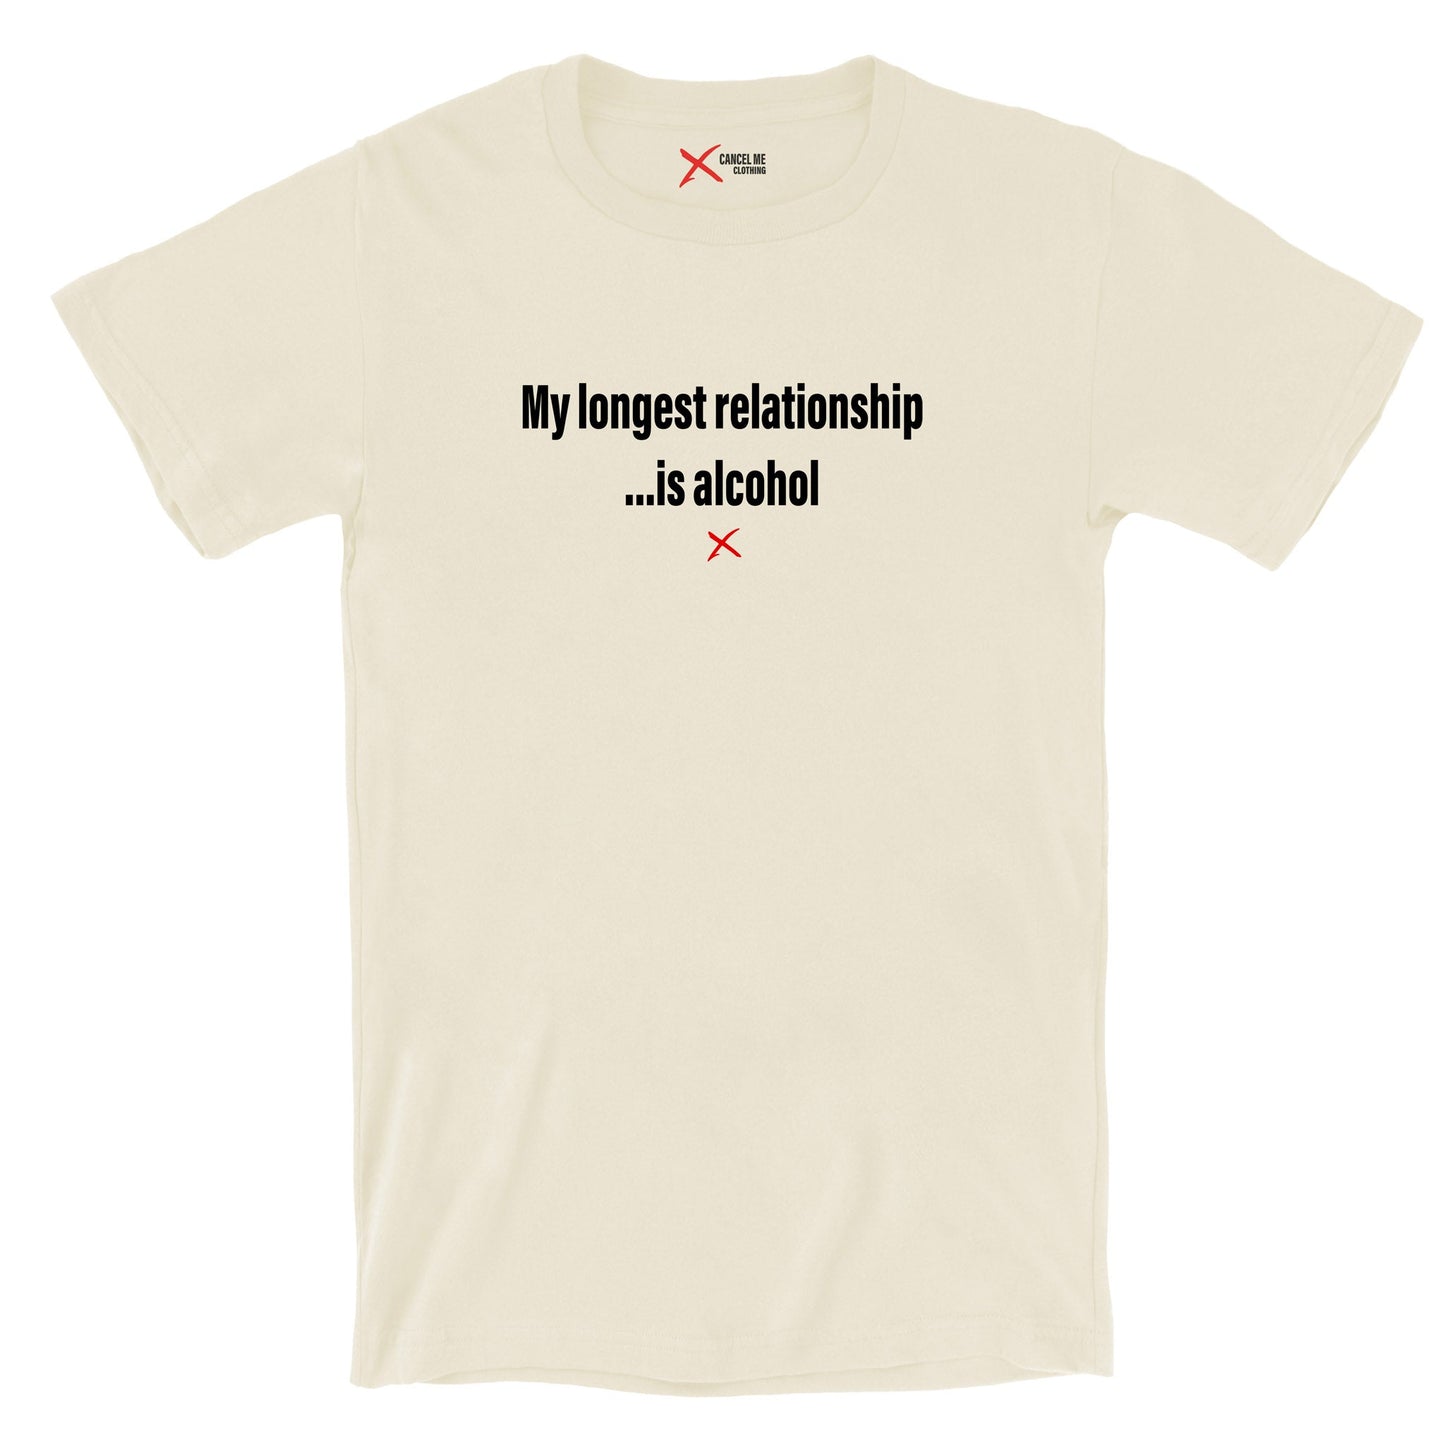 My longest relationship ...is alcohol - Shirt